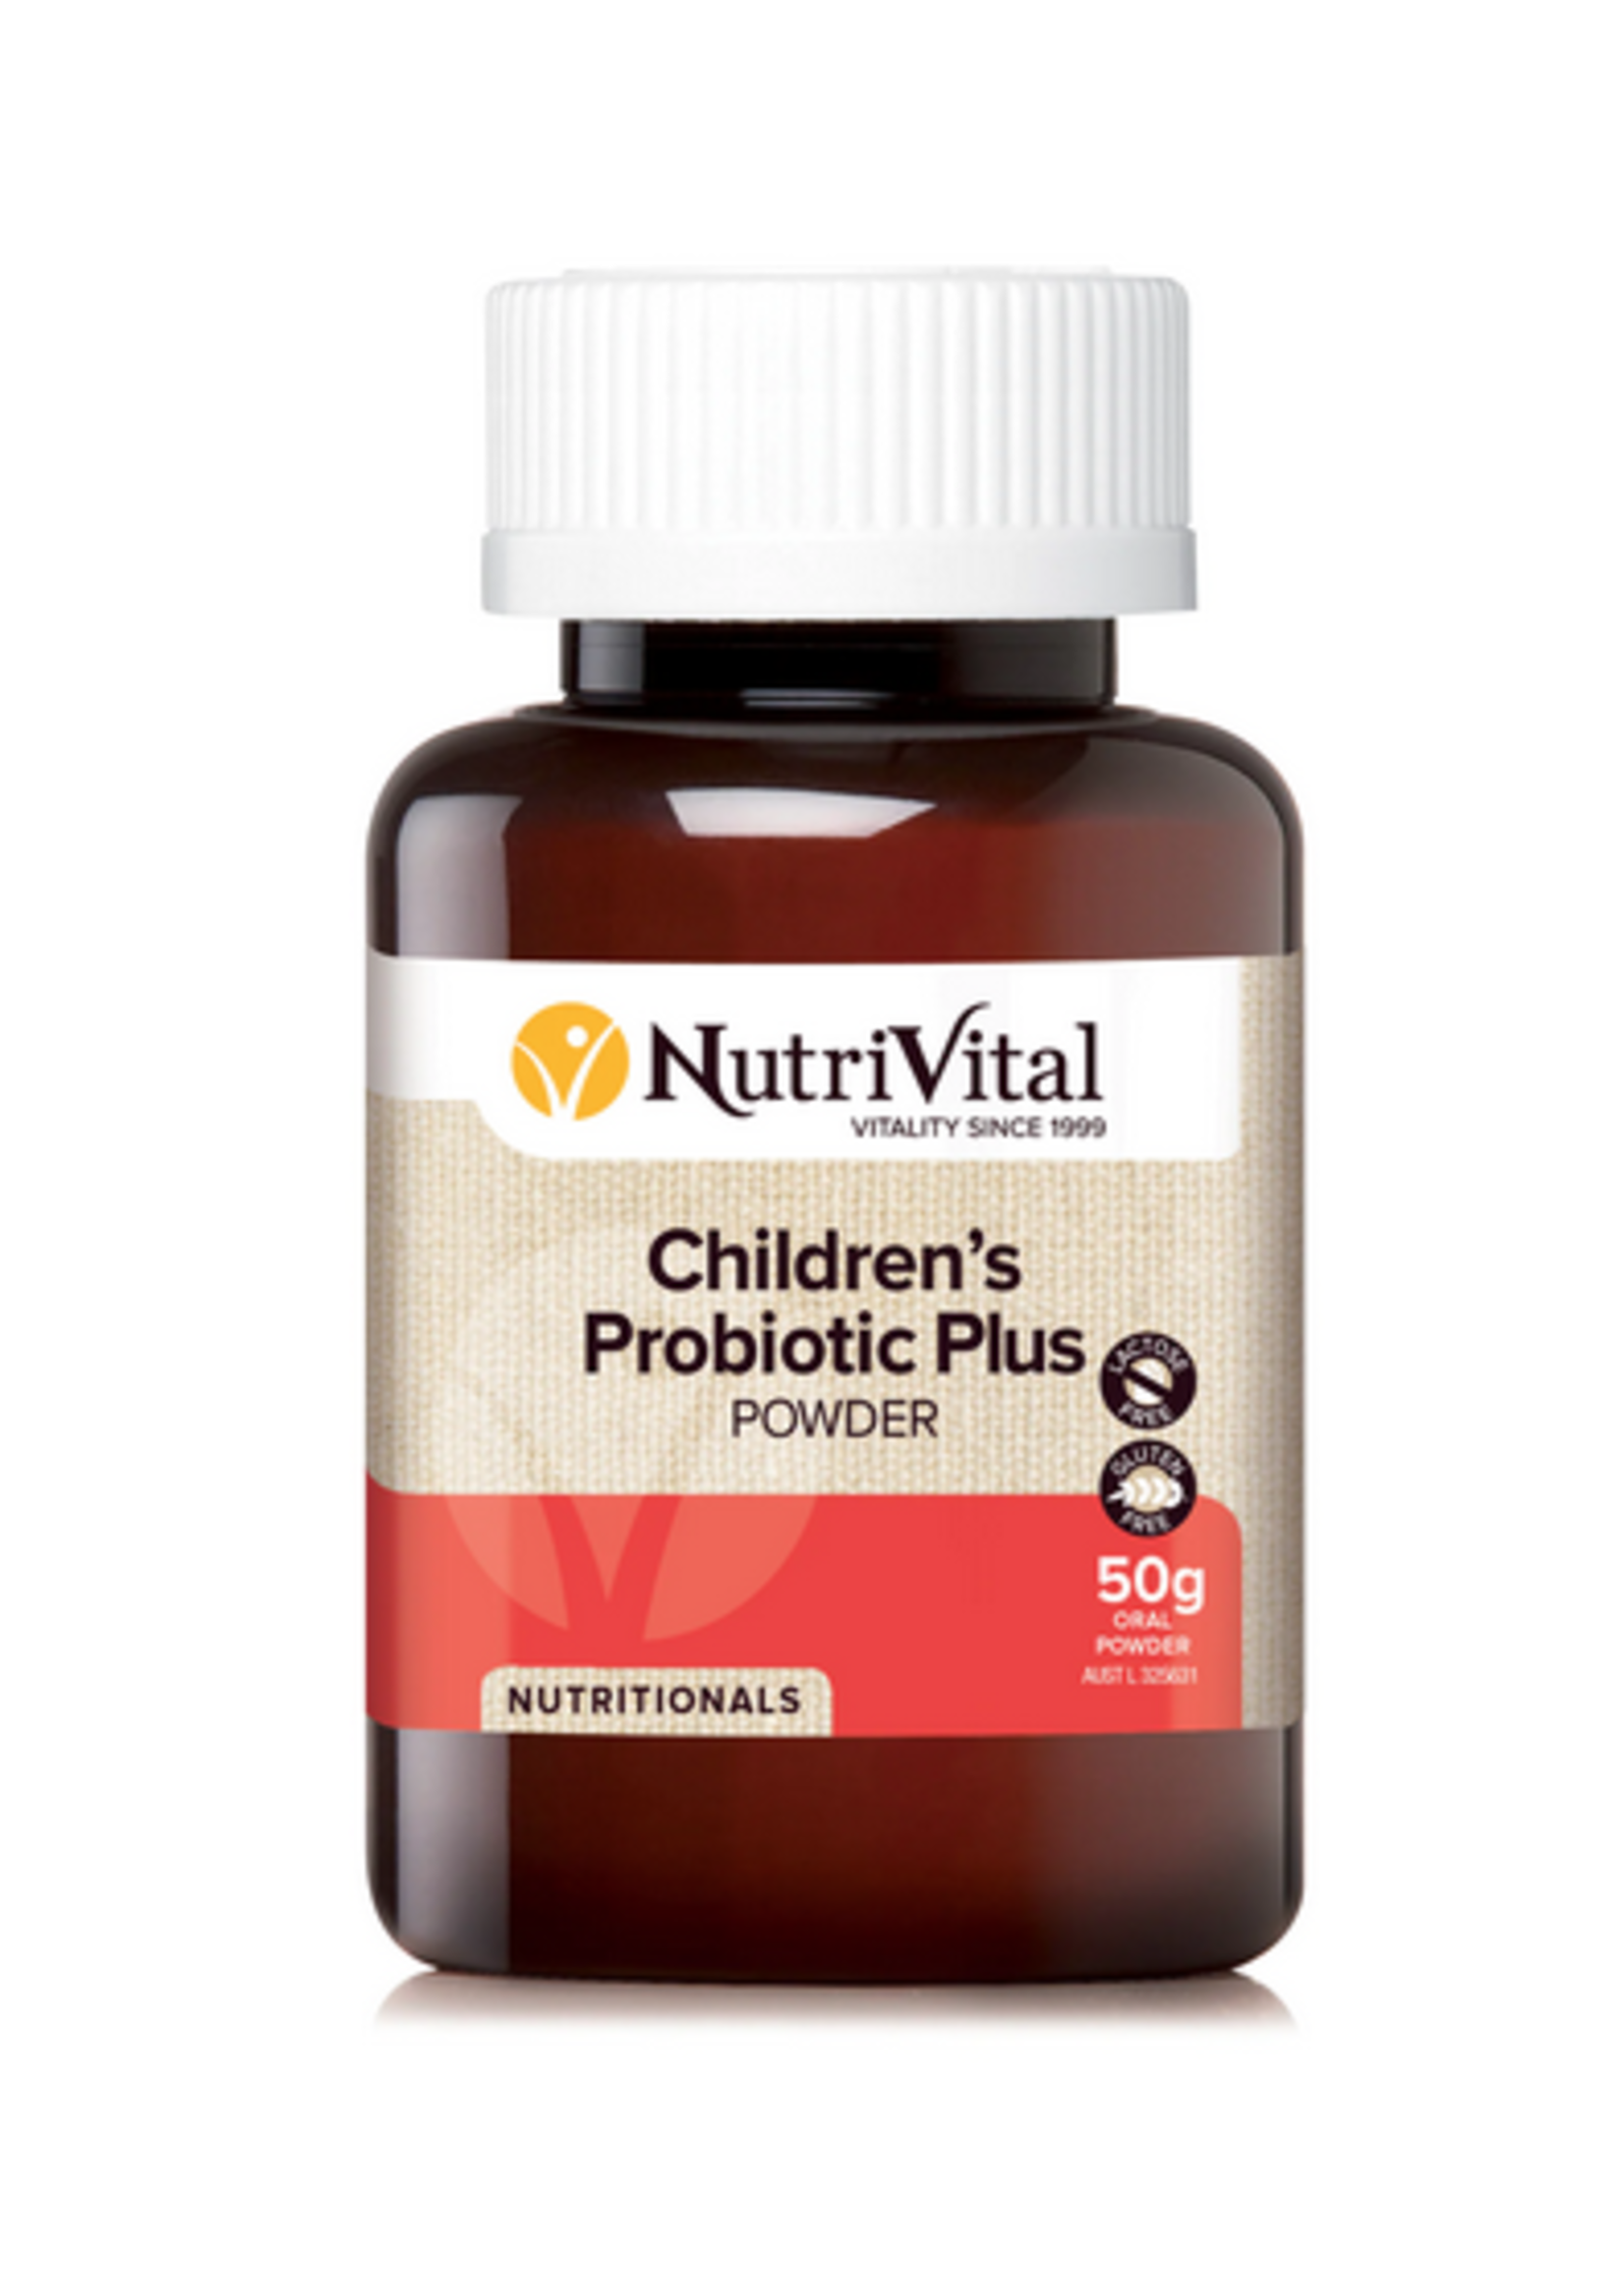 Nutrivital NutriVital childrens Probiotic plus powder 50g